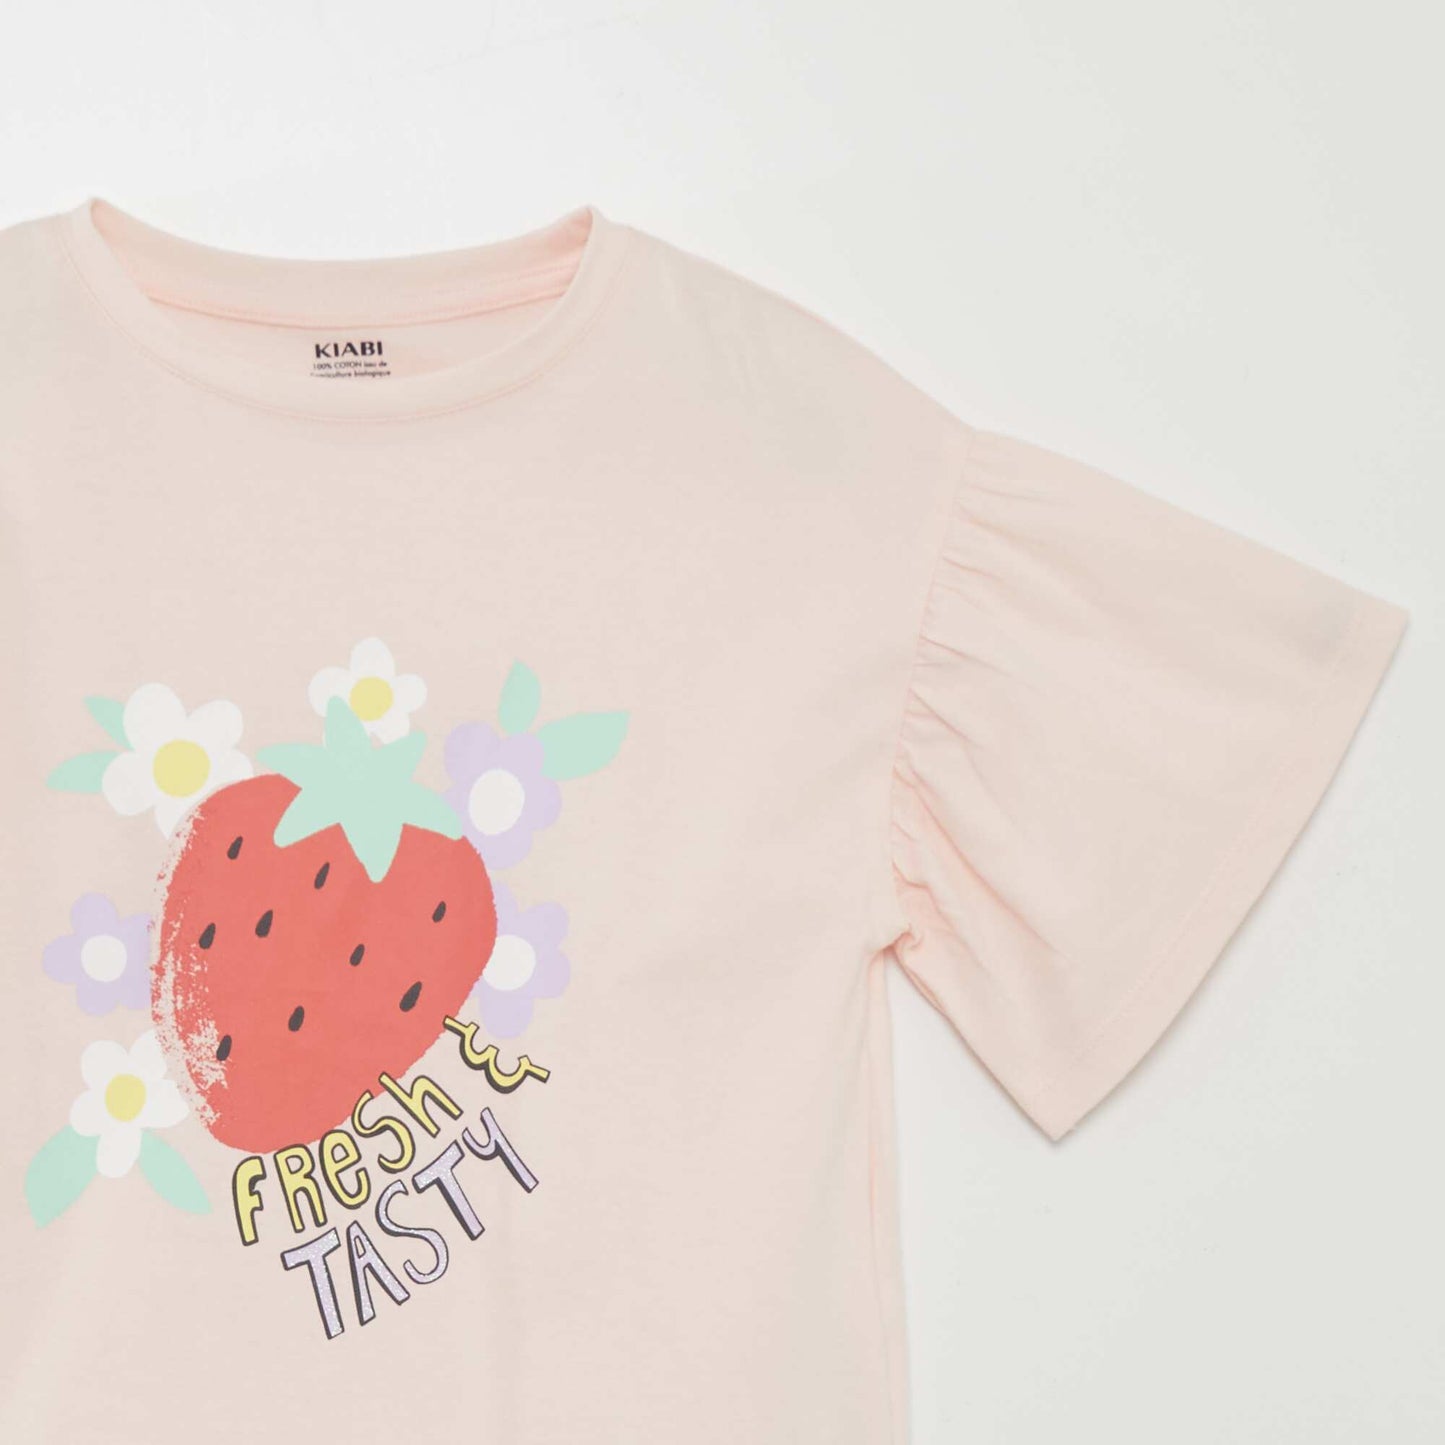 Short-sleeved fruit print T-shirt PINK